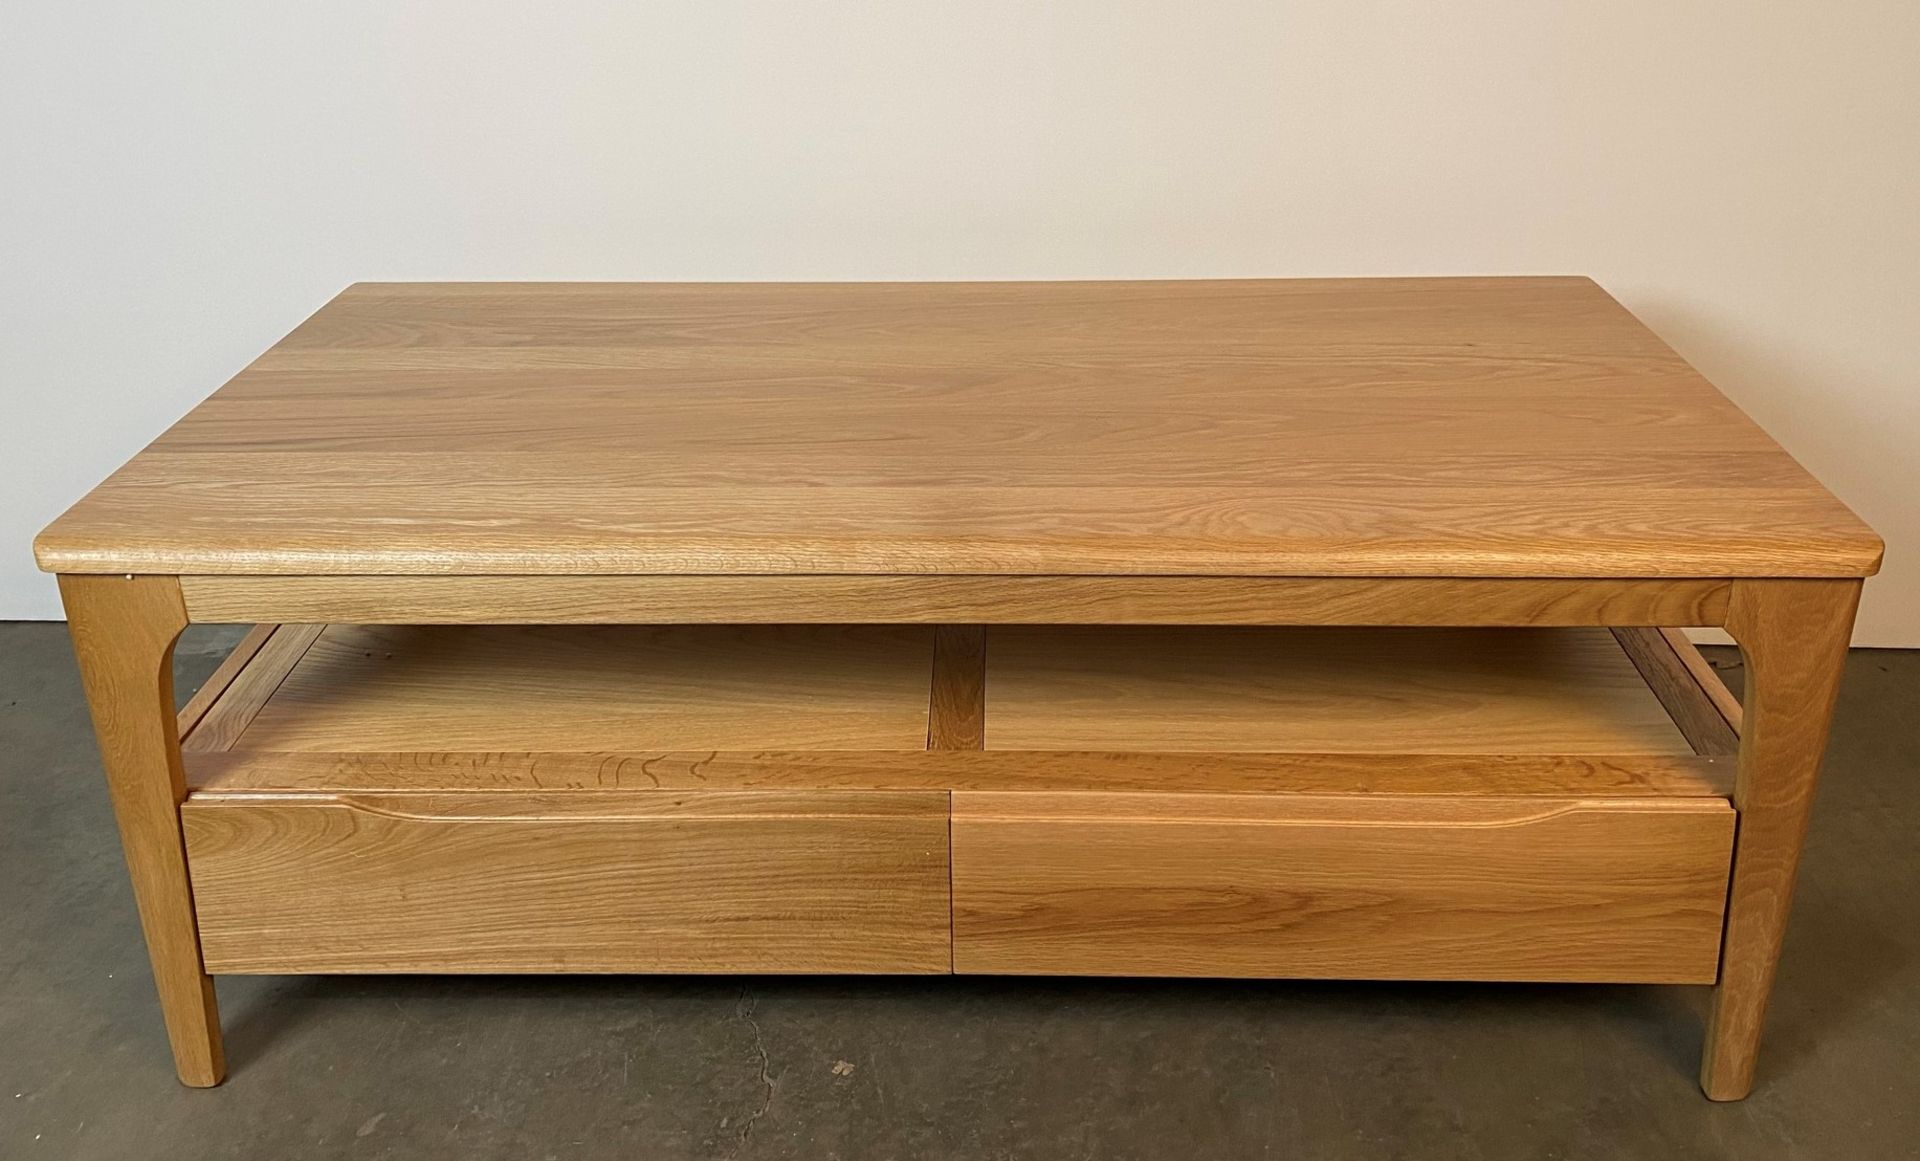 An Solid Oak + Phoenix 4 drawer coffee table - 120cm x 60cm x 45 cm - Image 2 of 10